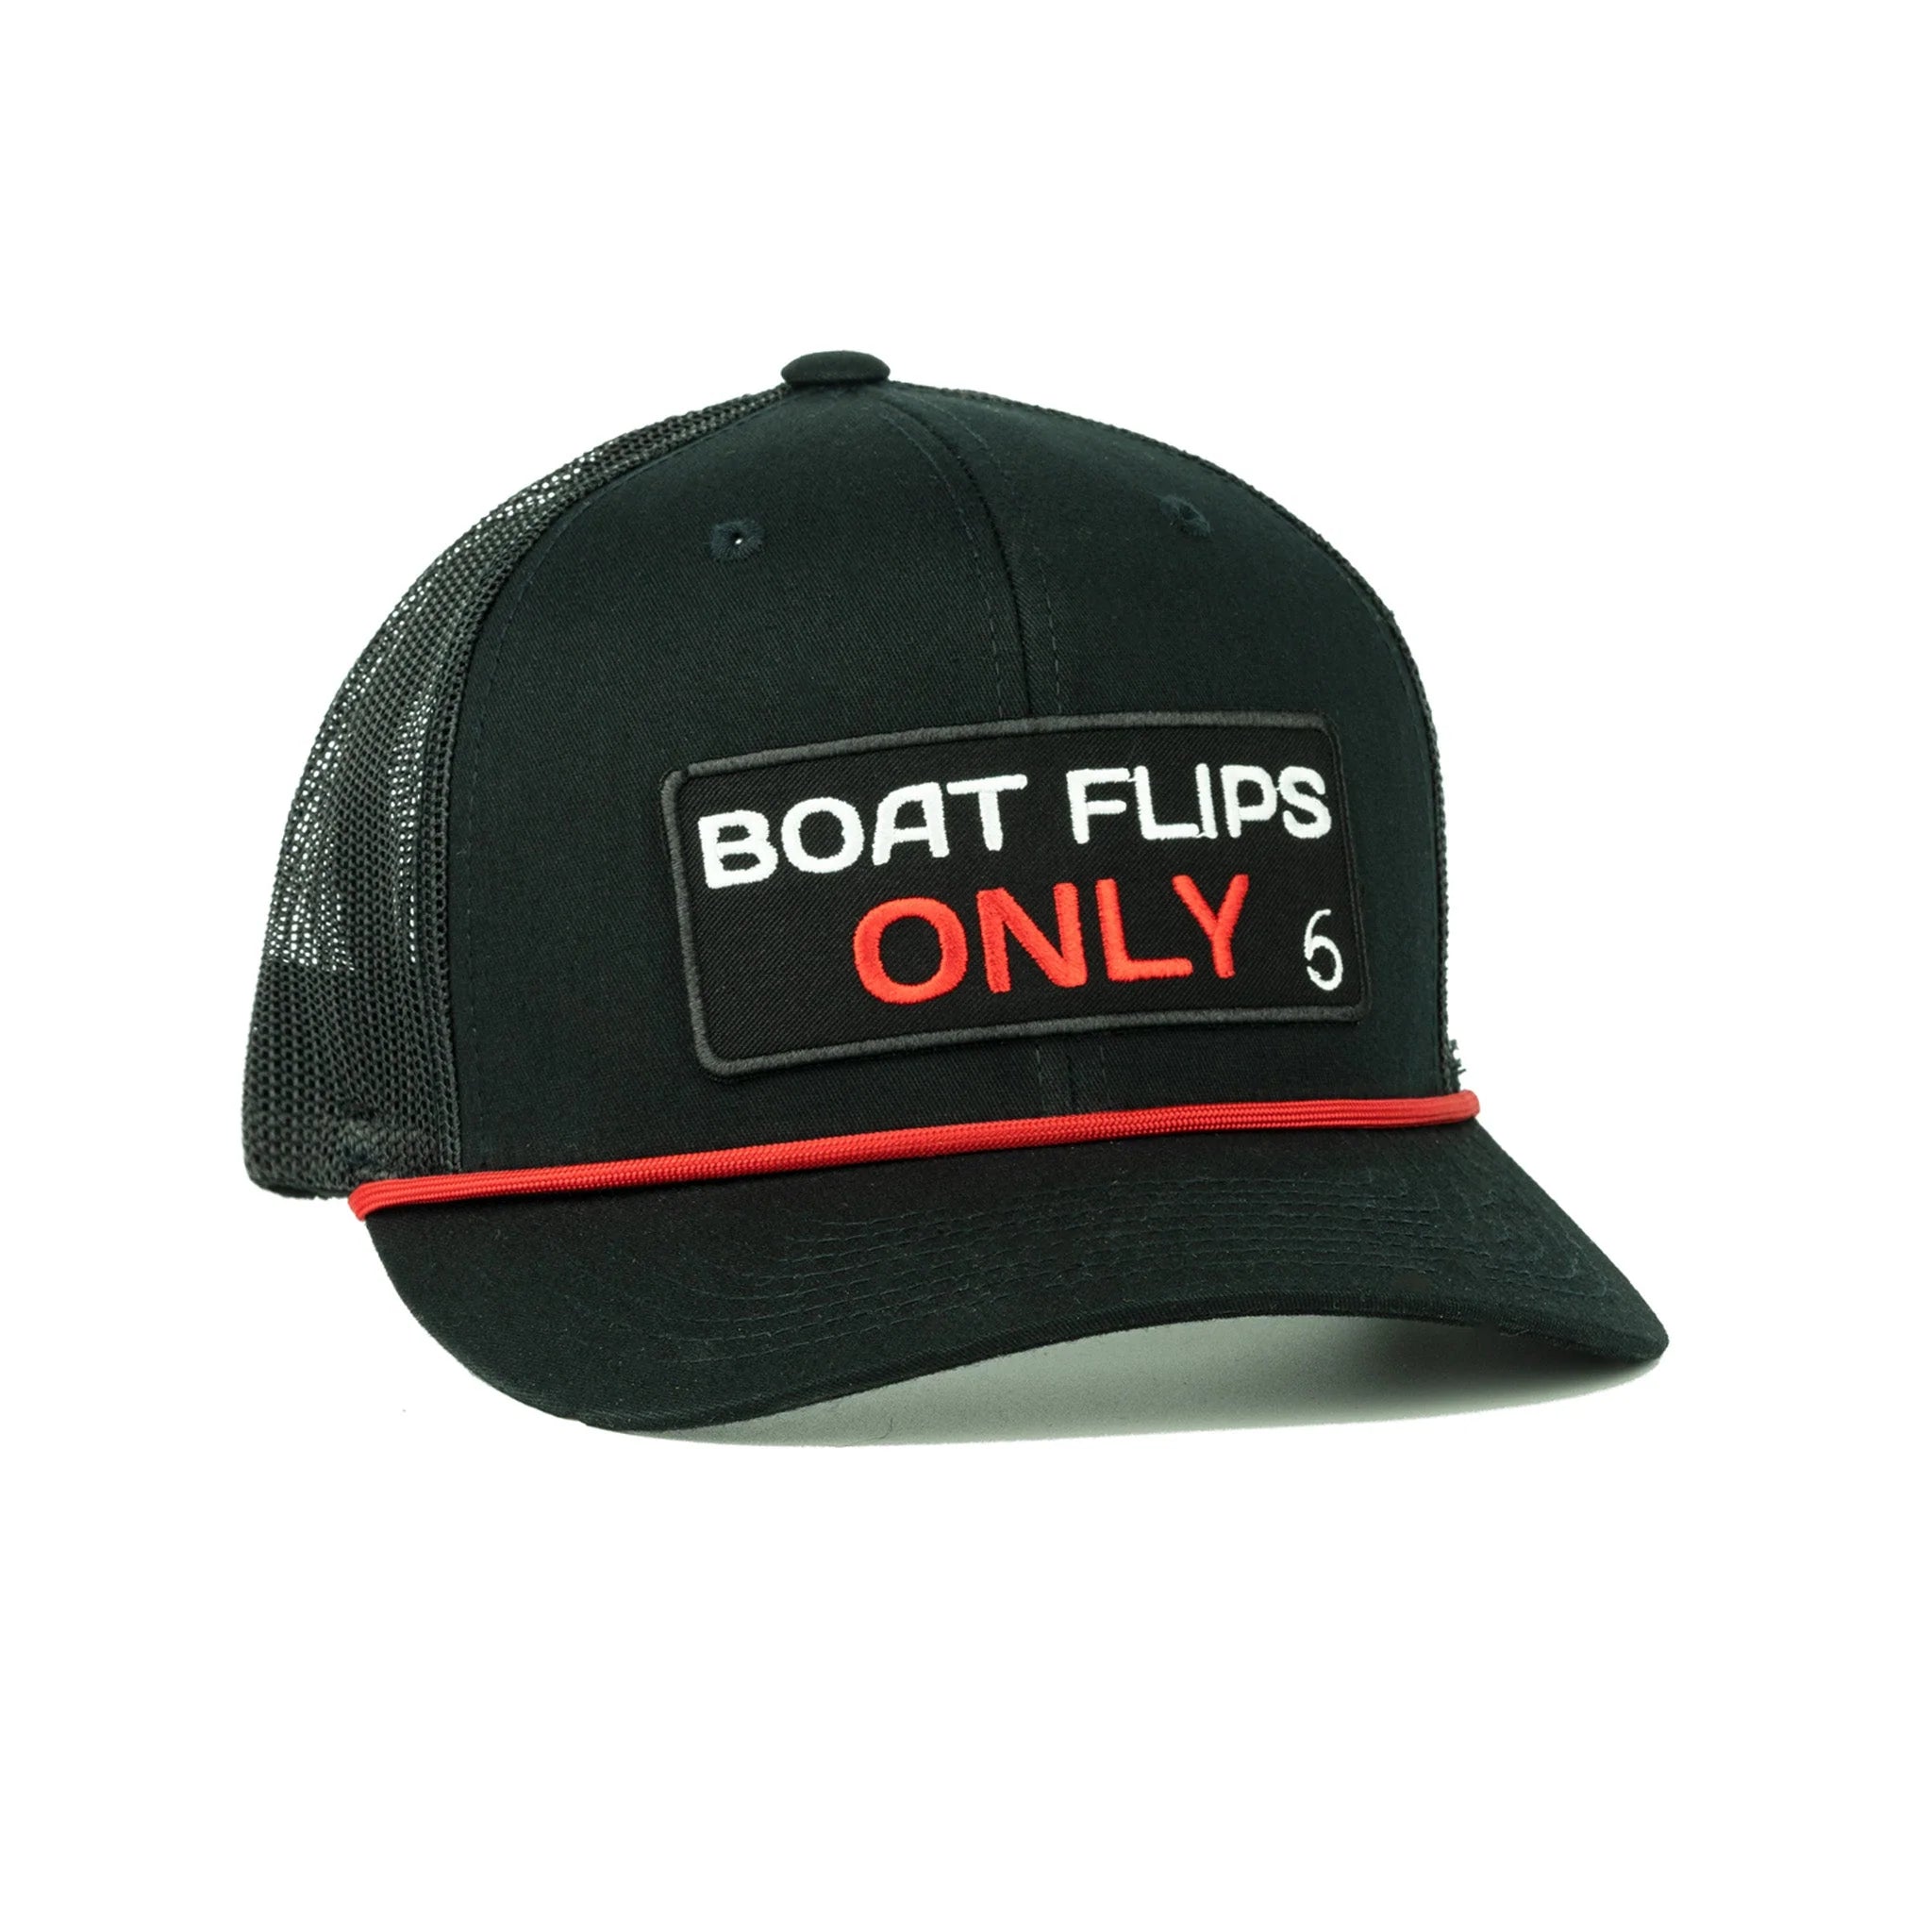 Boat Flips Only - Rope - Black